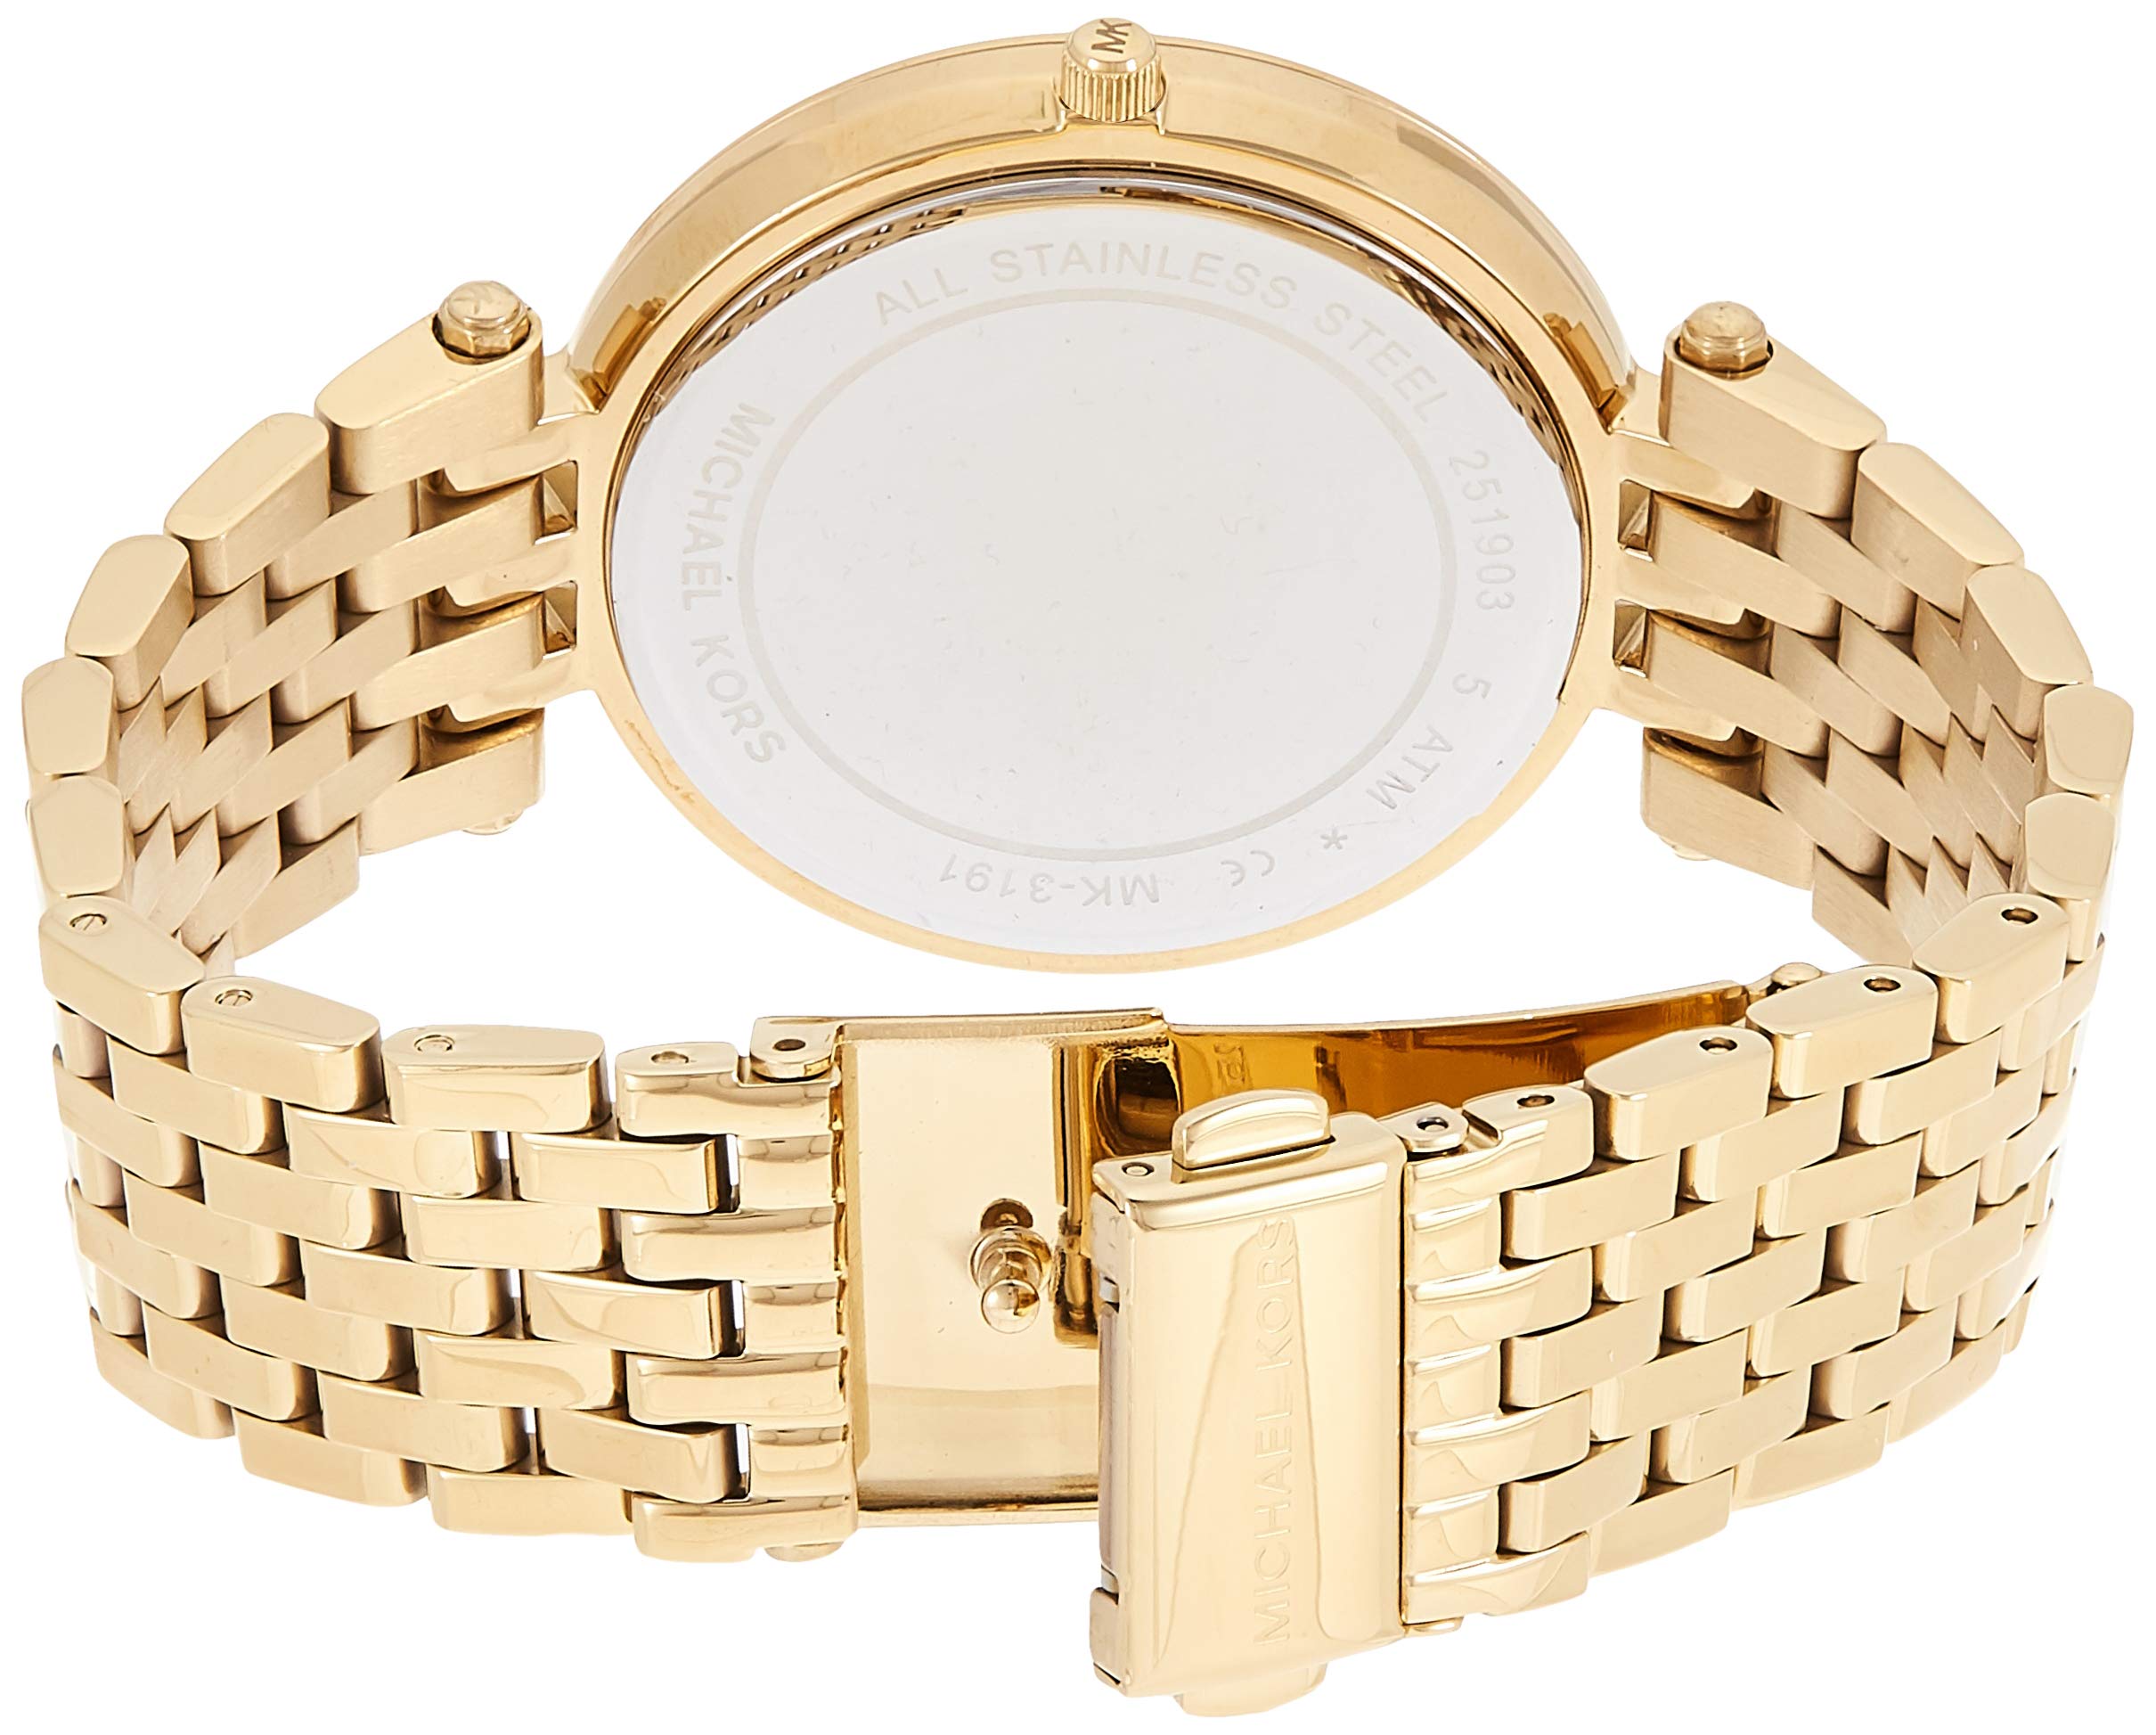 Michael Kors Women's Watch Darci, 39mm case Size, Three Hand Movement, Stainless Steel Strap, Gold, std, Bracelet